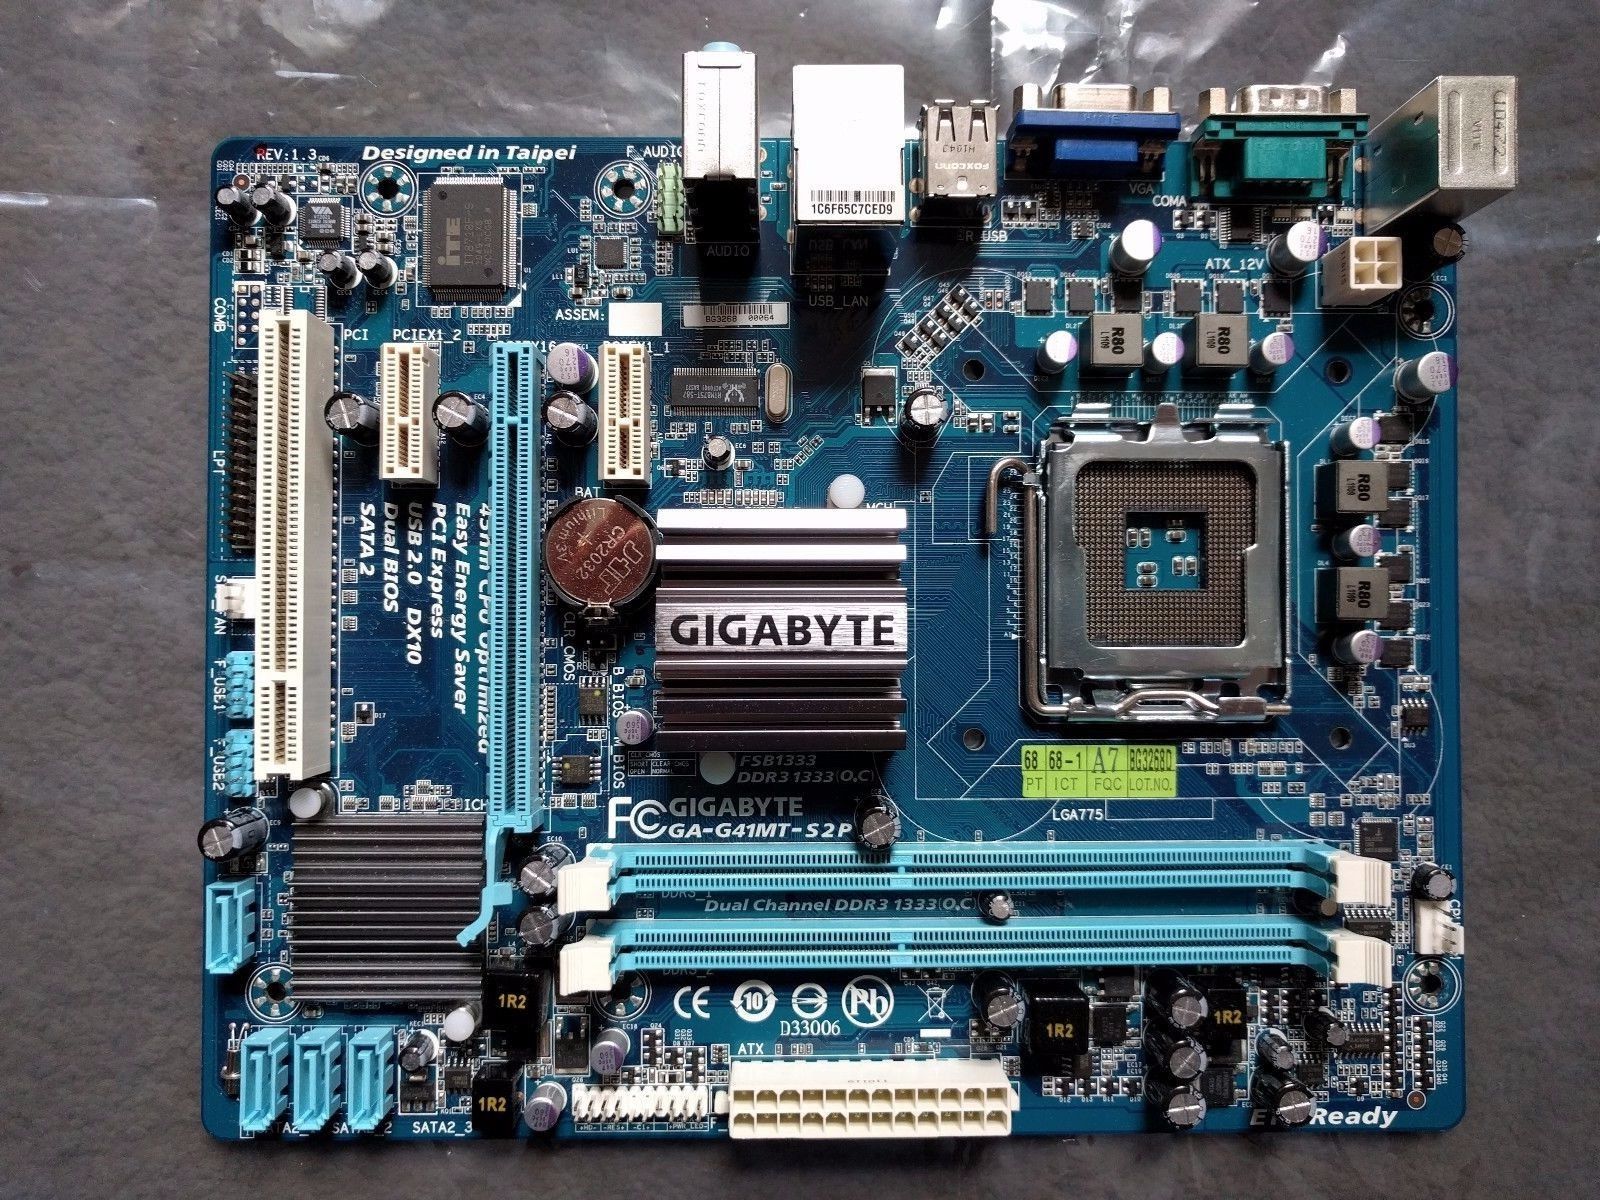 GIGABYTE GA-G41MT-S2P LGA 775 Intel microATX Motherboard tested